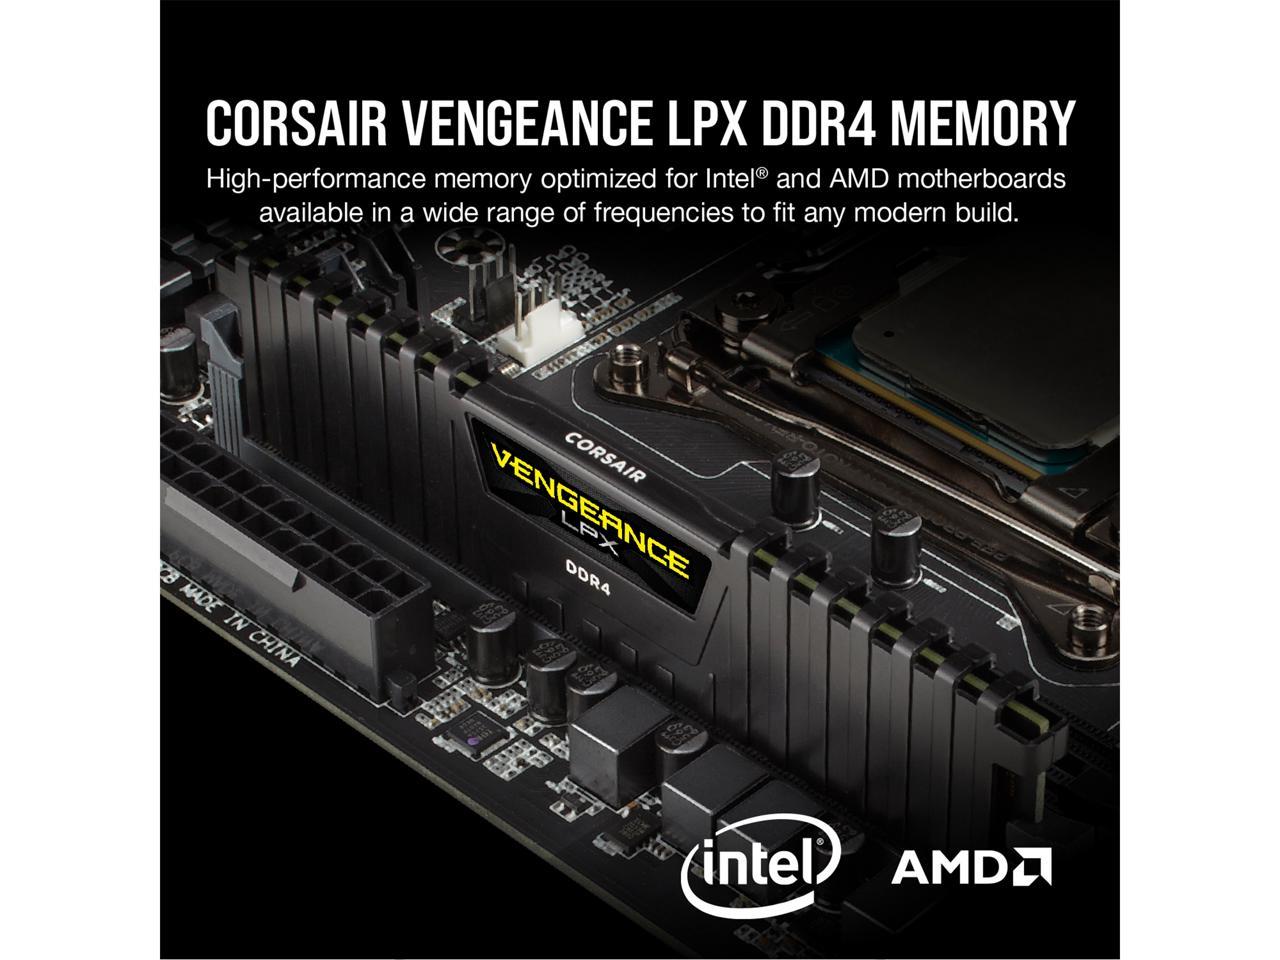 CORSAIR Vengeance LPX 16GB DDR4 3200 Desktop Memory - Newegg.com